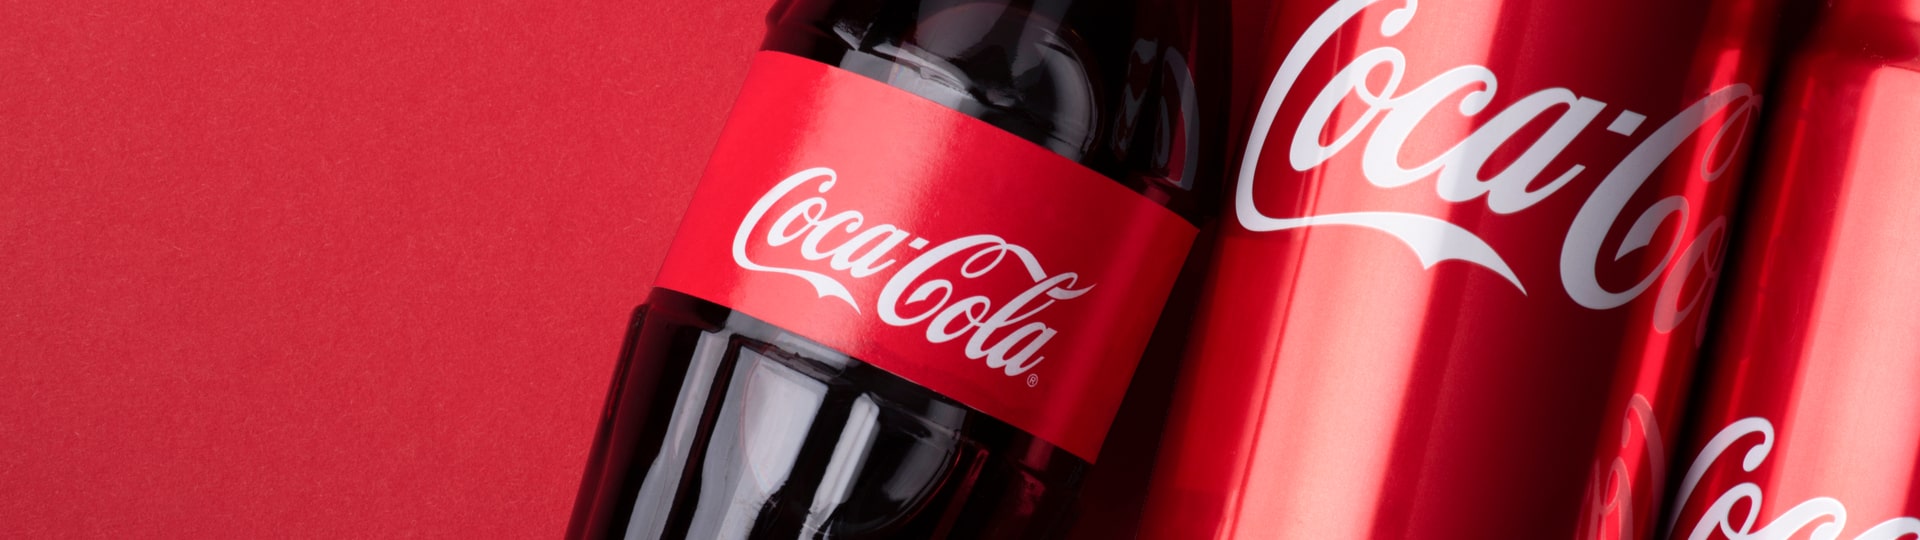 Coca-Cola zaplatí 5,6 miliardy dolarů, aby ovládla značku BodyArmor